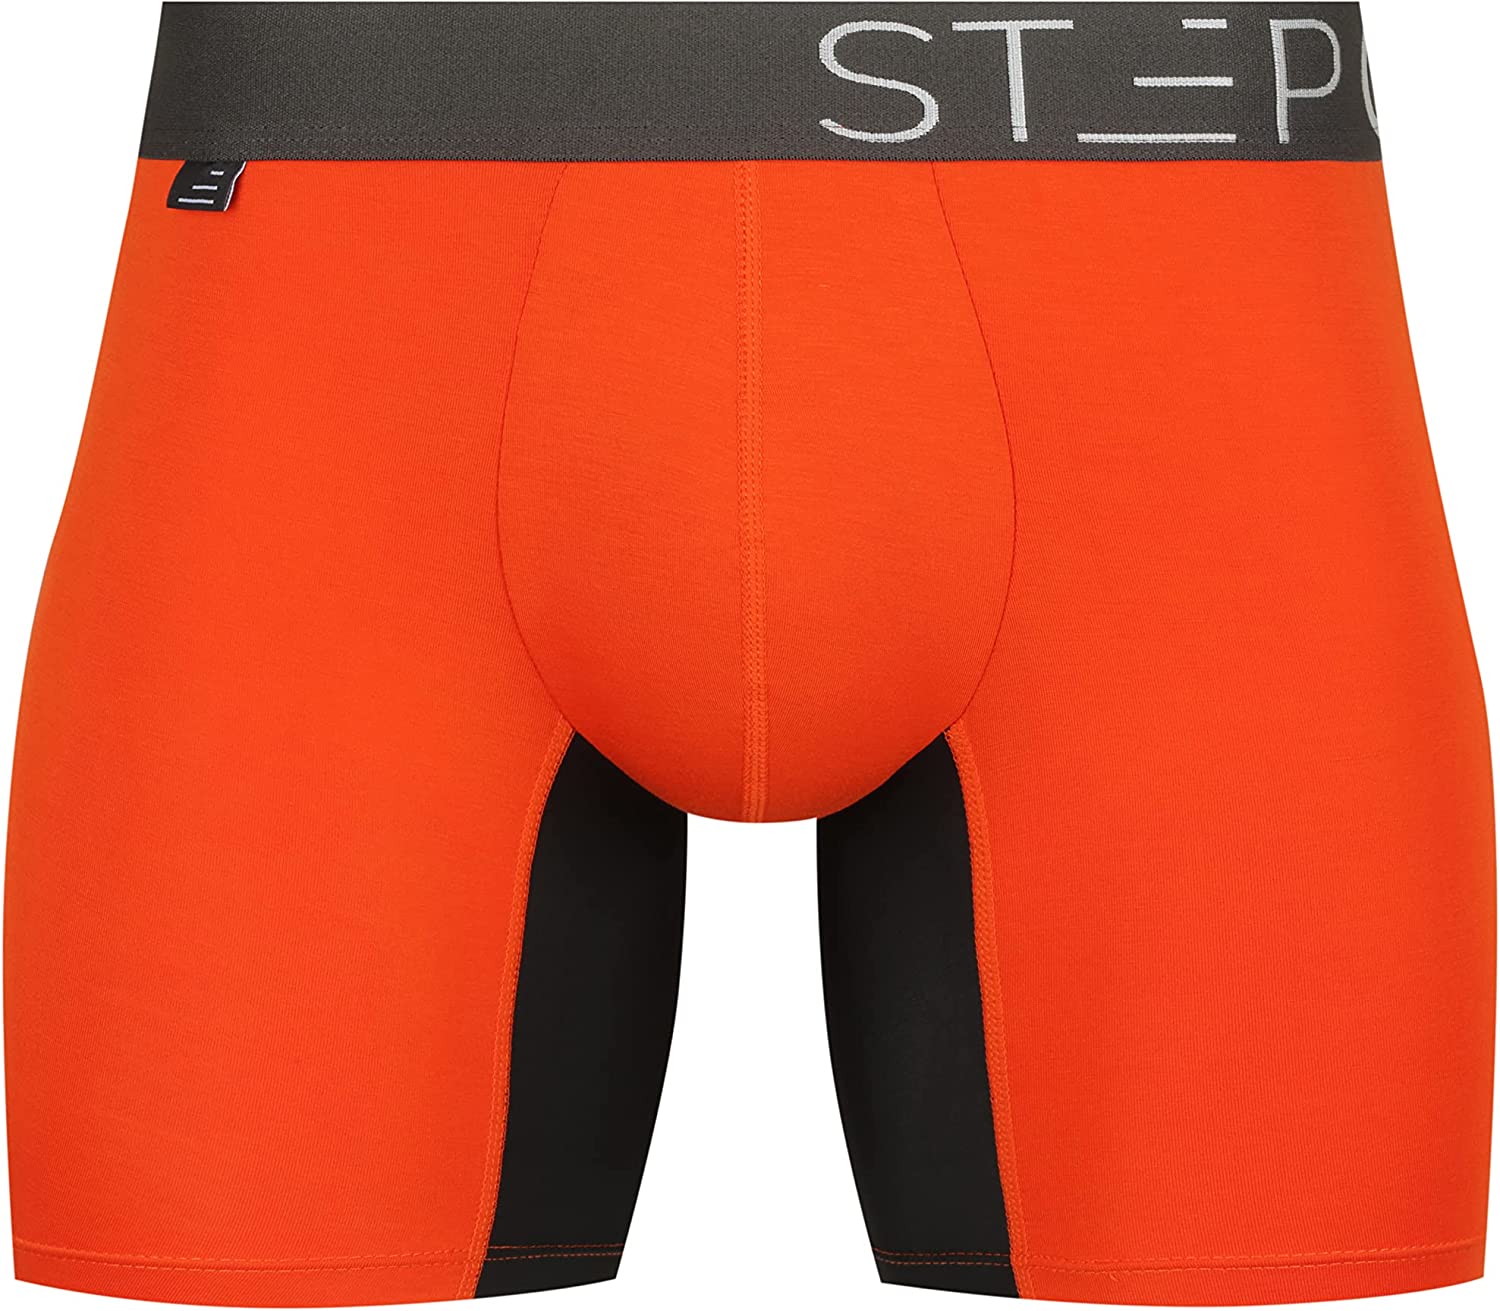 STEP ONE Mens Boxers Underwear for Men, Moisture-Wicking